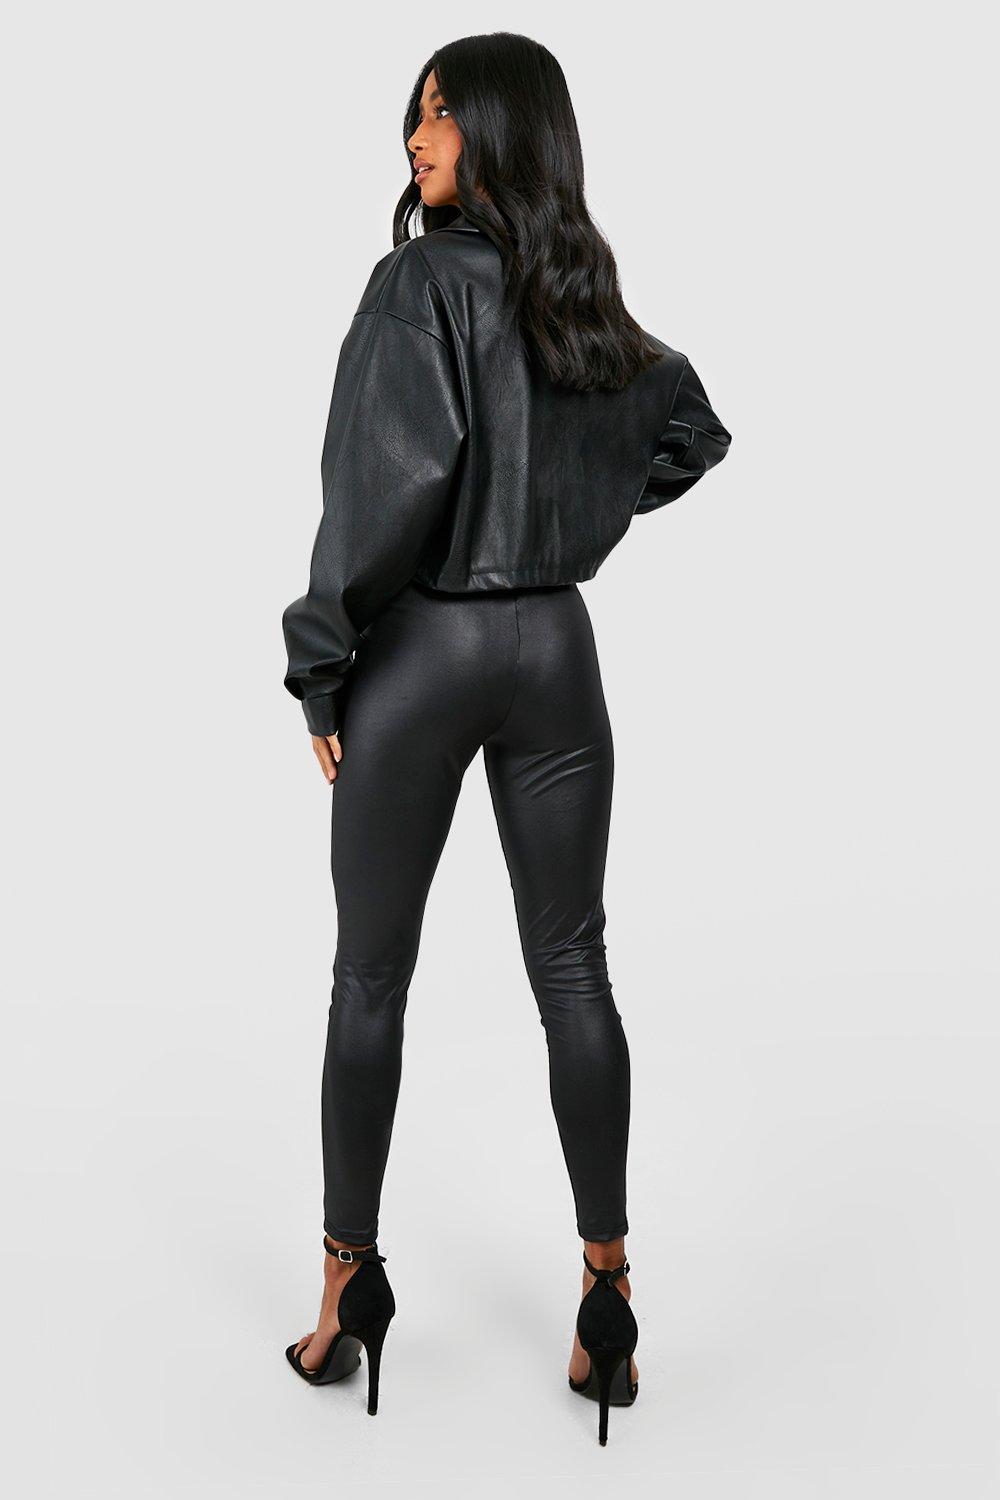 Fashion Women Black Shiny PVC Wet Look High Waist Skinny Leggings